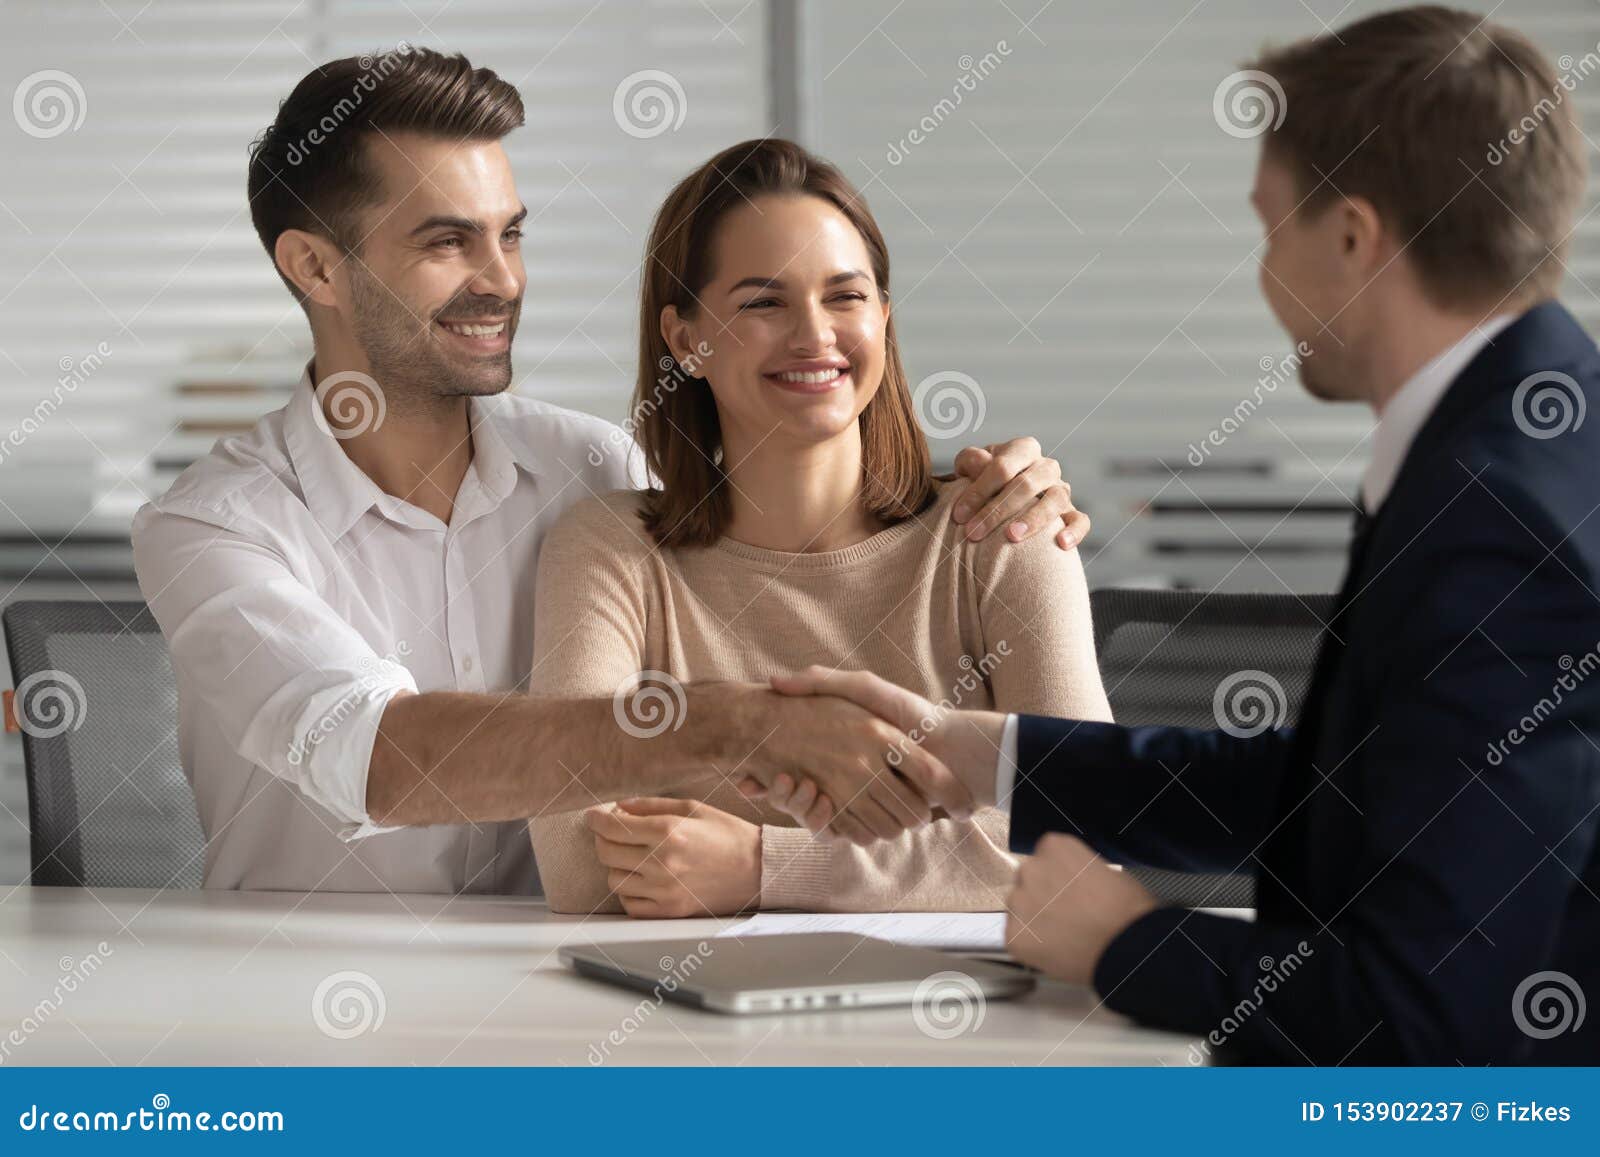 happy young couple handshake lawyer insurer broker make business deal